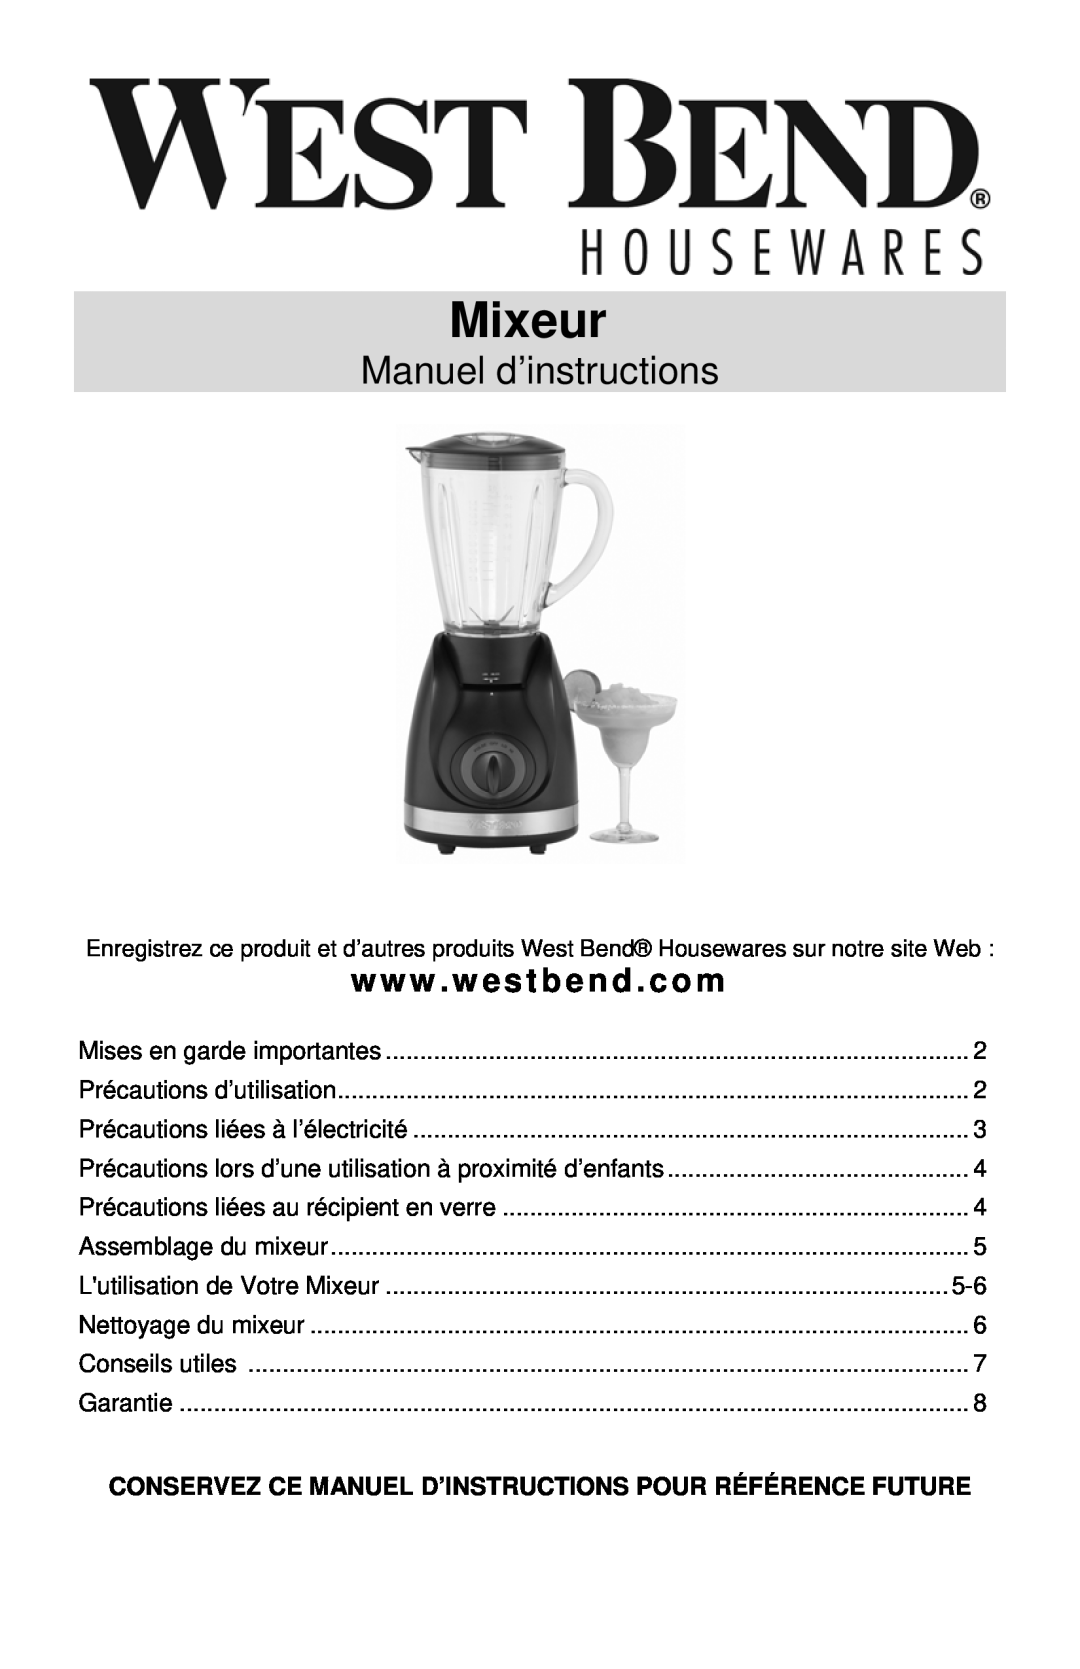 West Bend Blender instruction manual Mixeur, Manuel d’instructions, www . westbend . com 